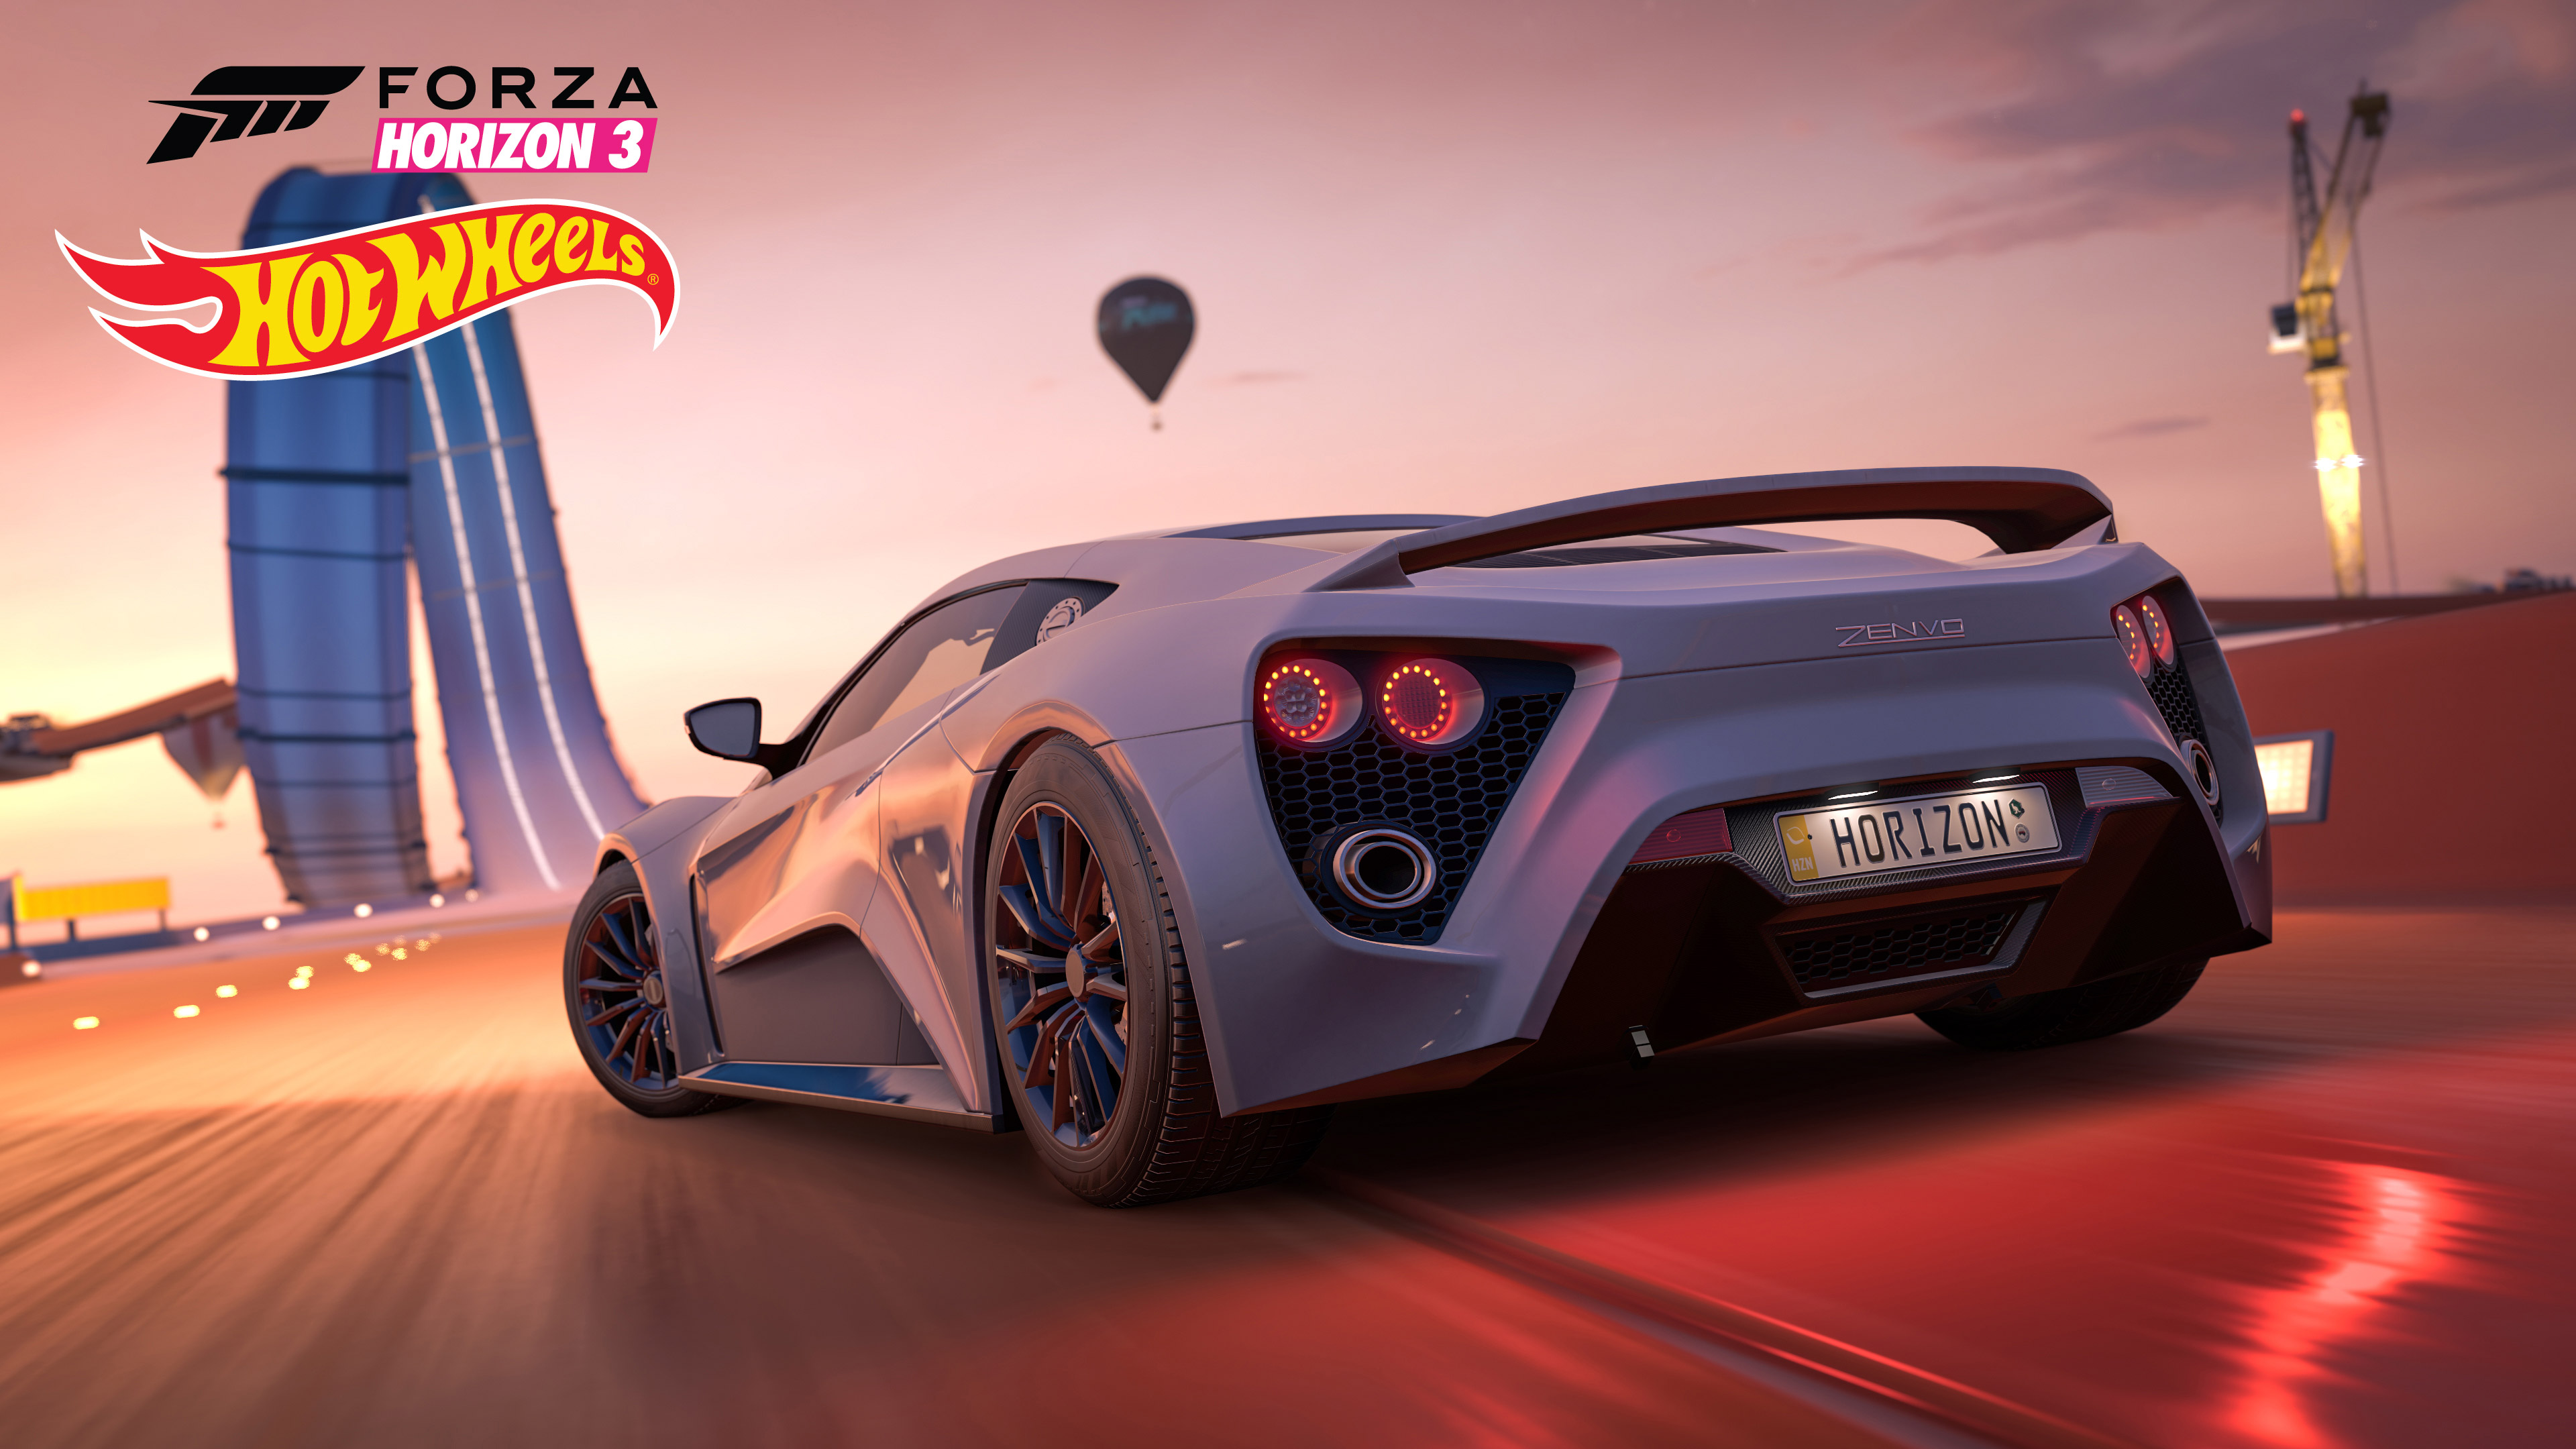 Forza Horizon 3 Hot Wheels, HD Games, 4k Wallpapers